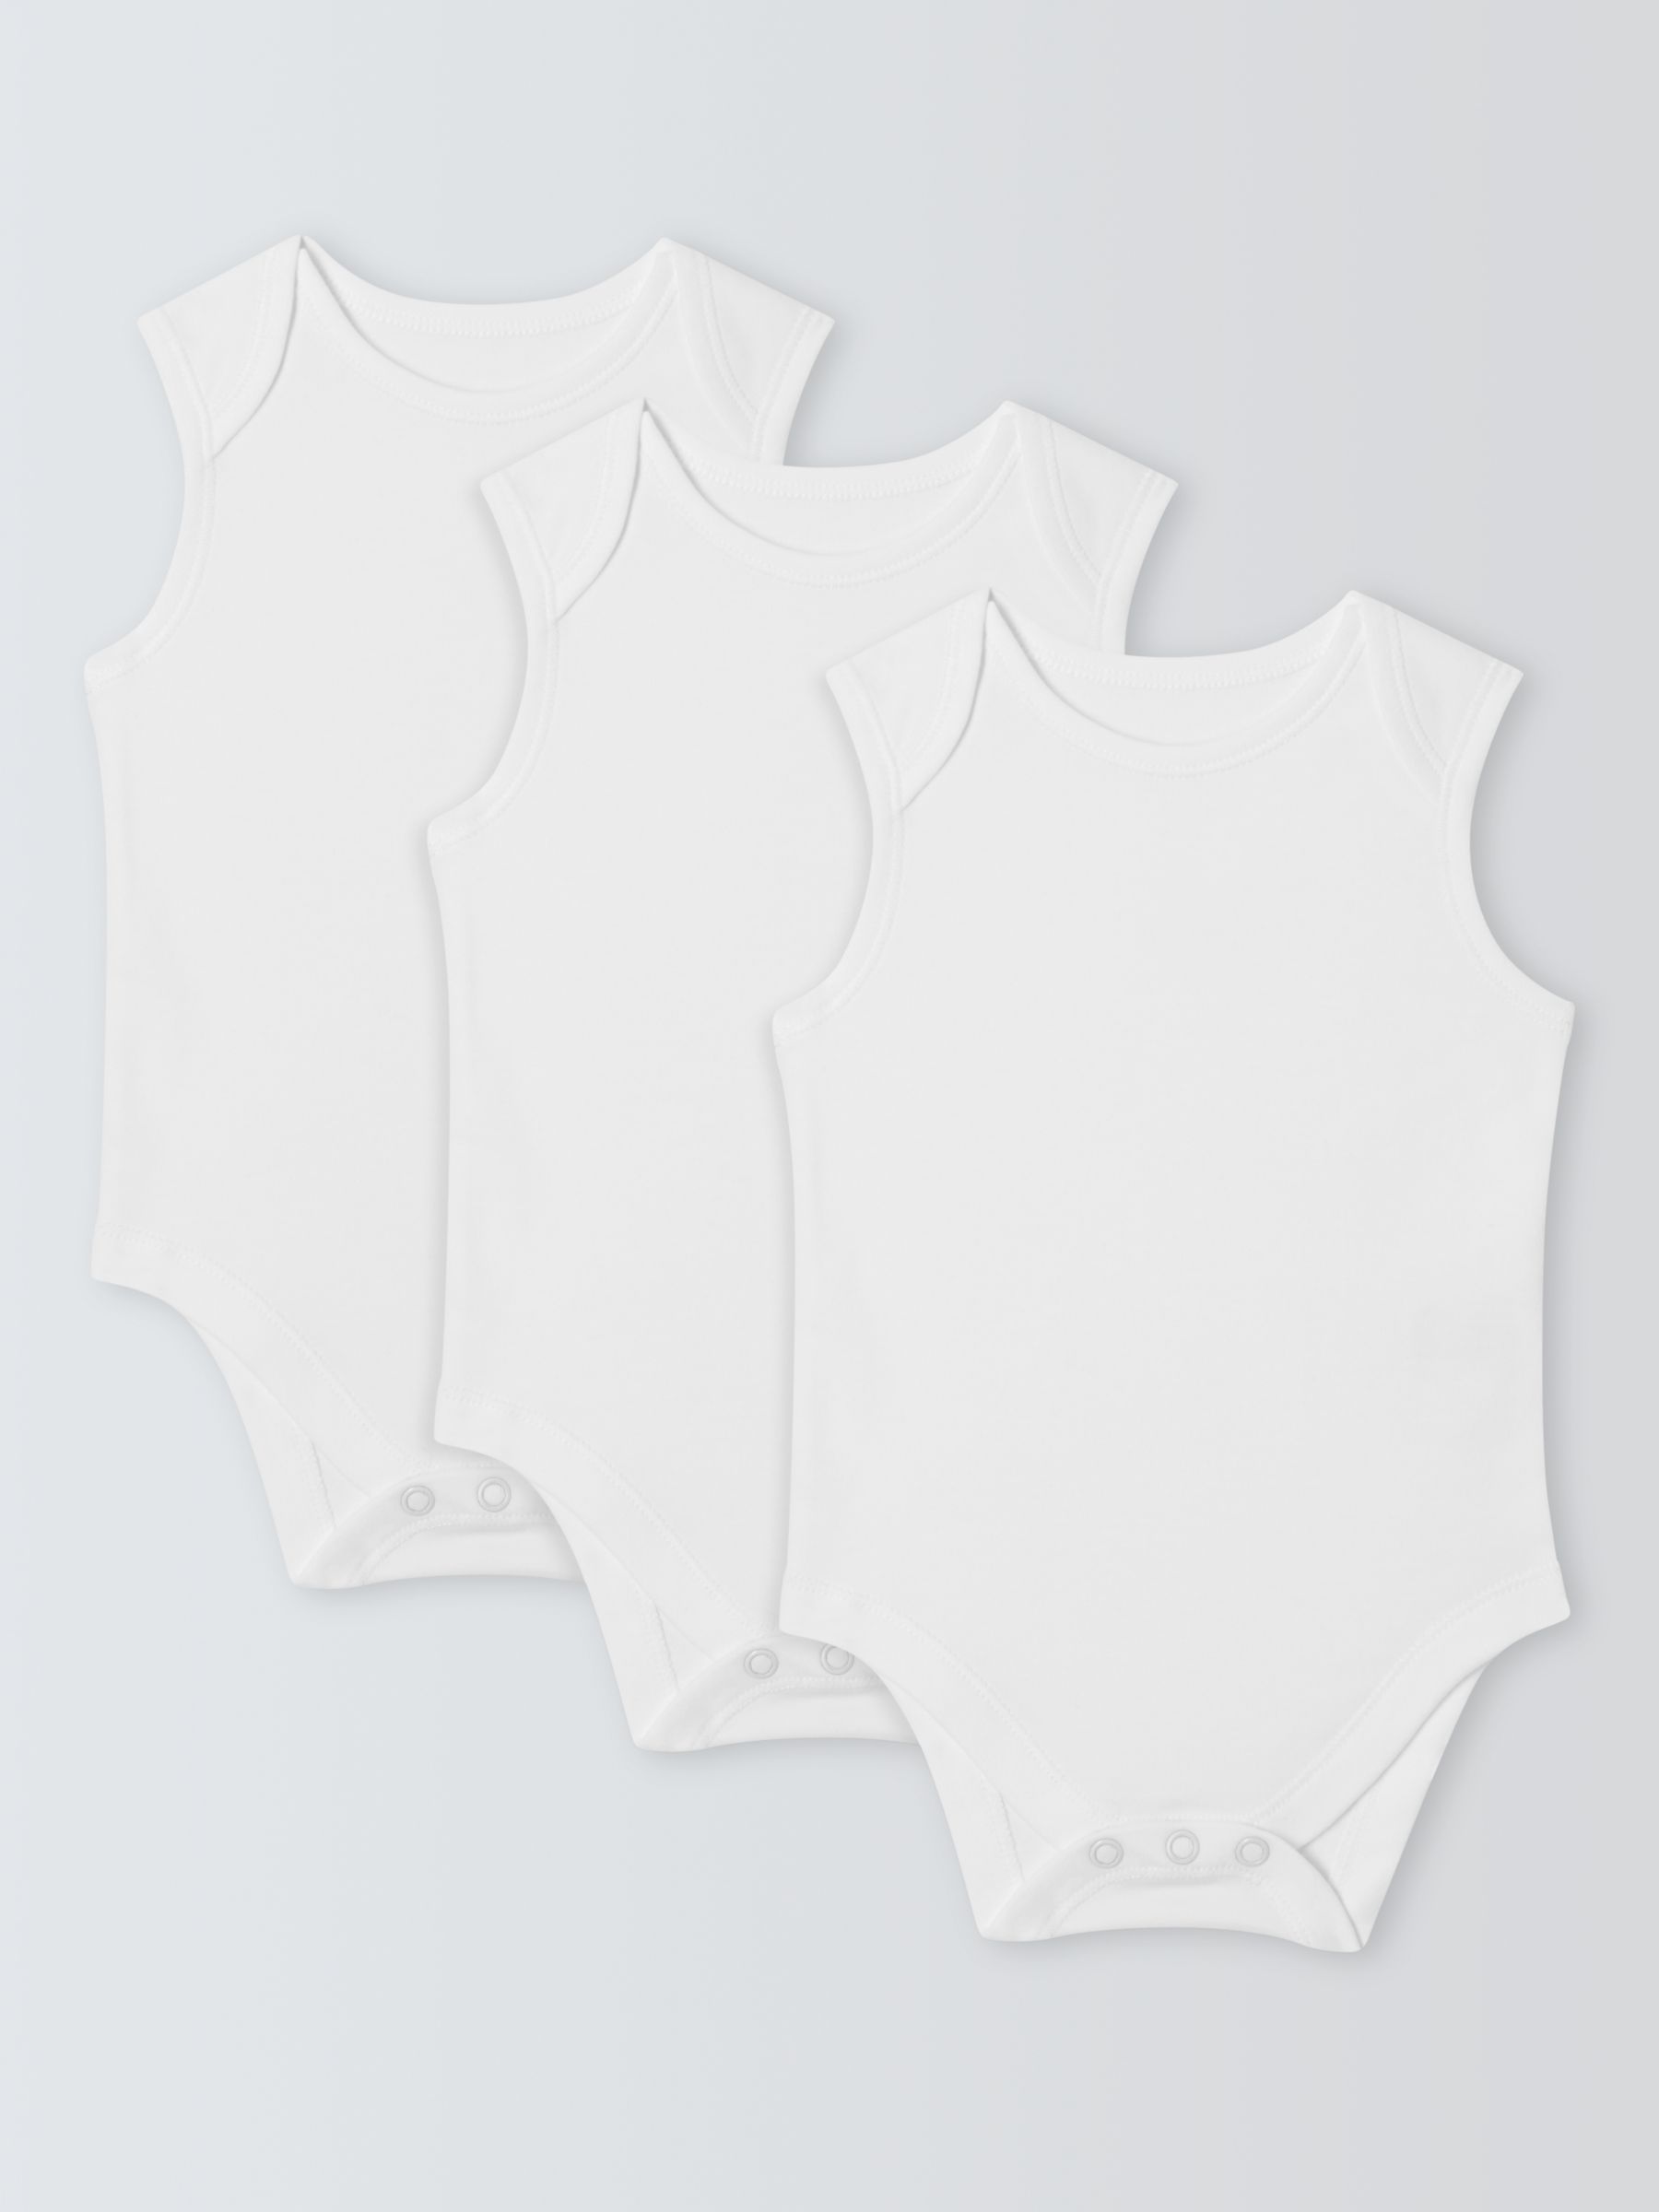 John Lewis Baby Pima Cotton Sleeveless Bodysuit, Pack of 3, White, 9-12 months